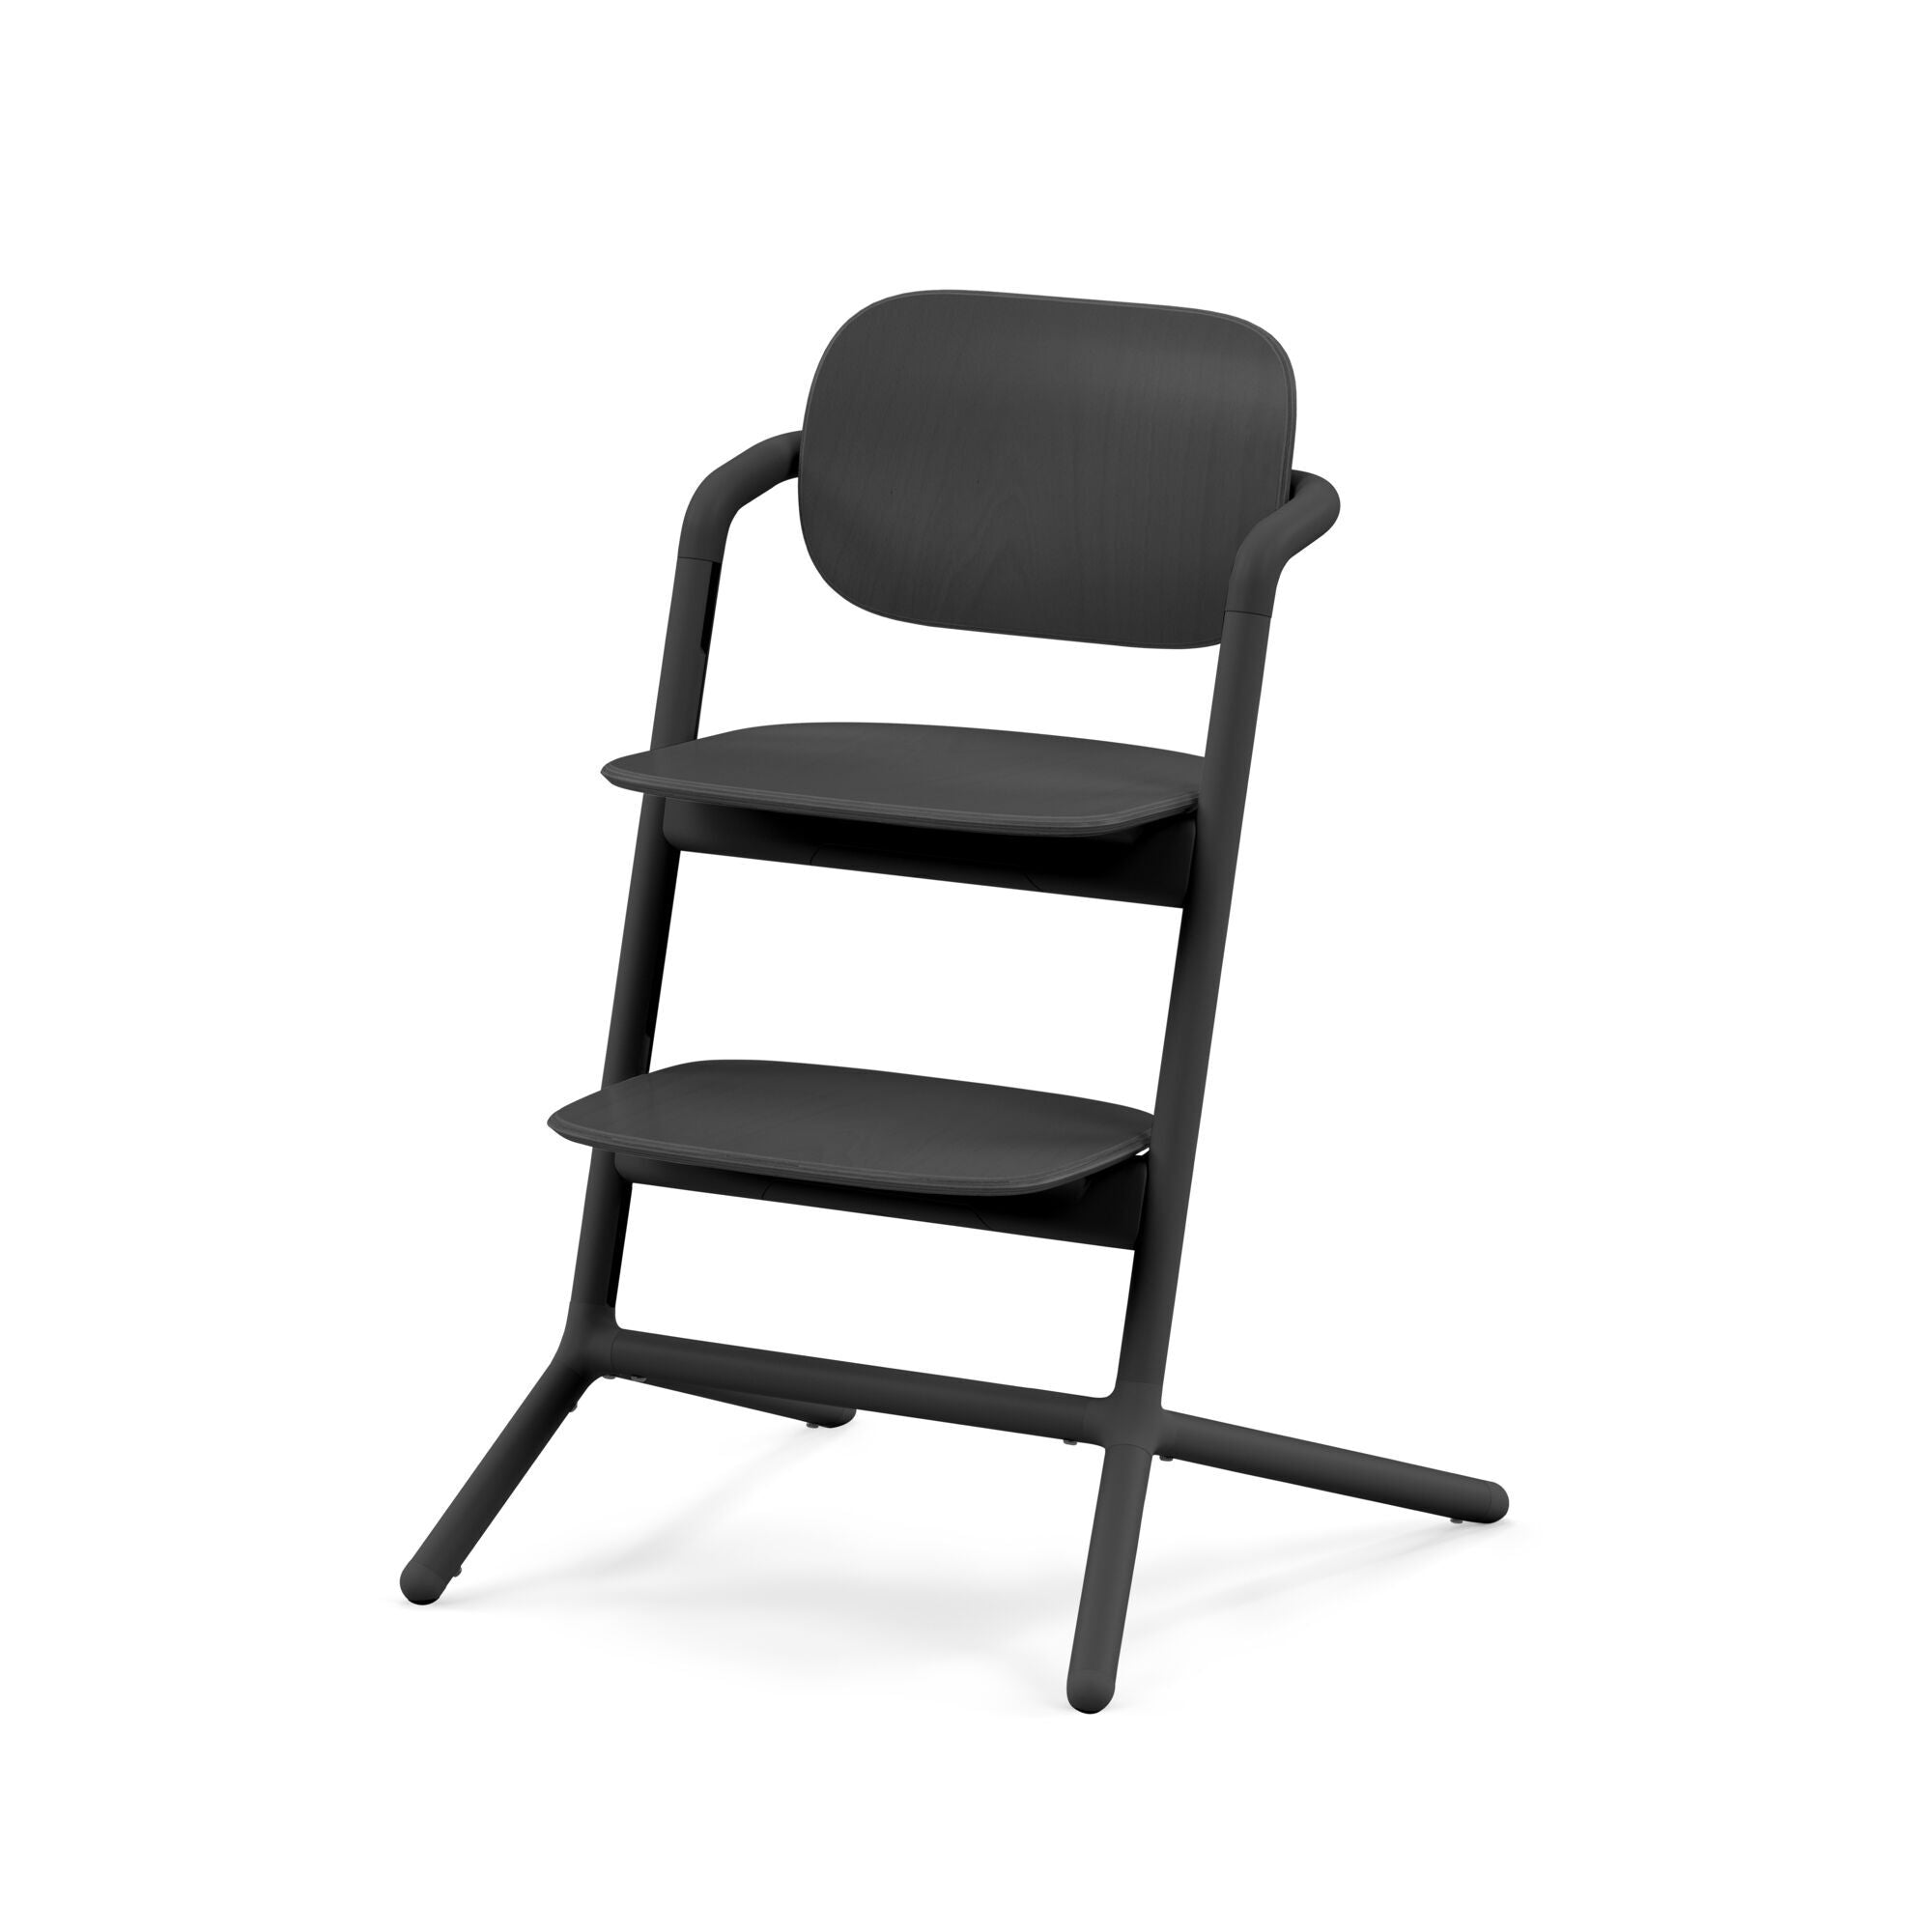 Cybex Lemo 2 High Chair 3-in-1 - ANB Baby -4063846197620$100 - $300